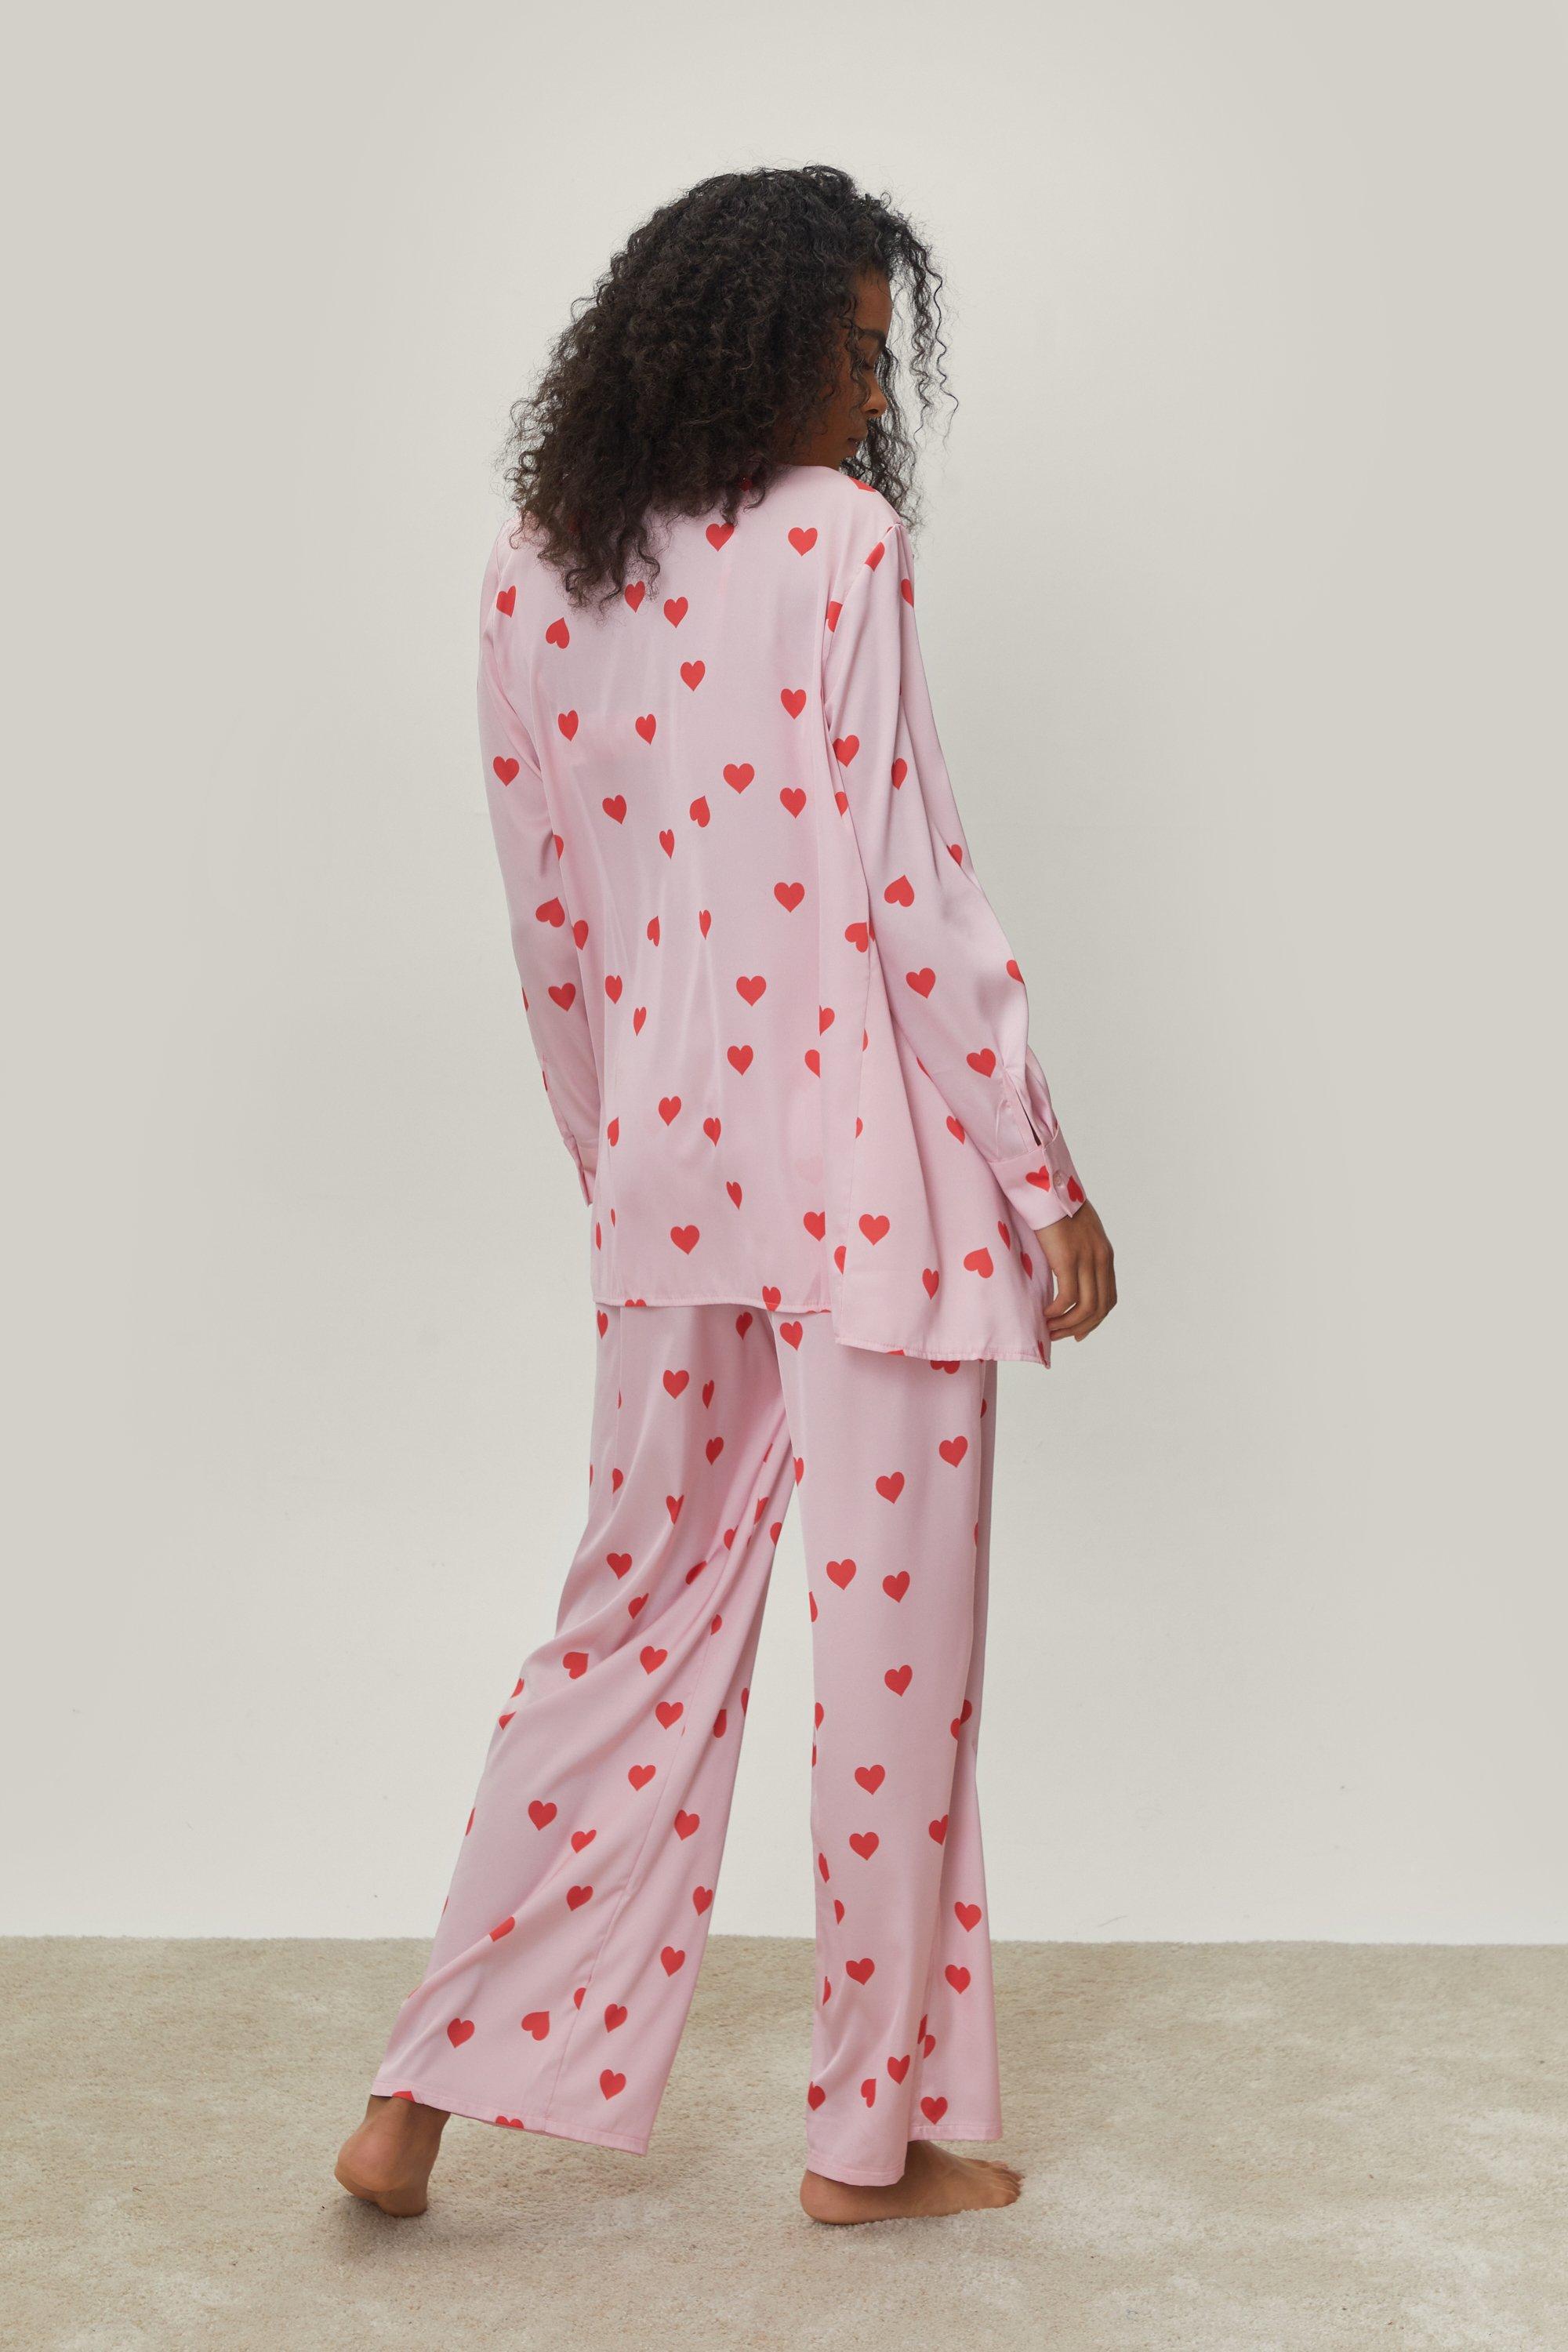 Cotton Yarn Dyed Plaid 3pc Pajama Pants Set